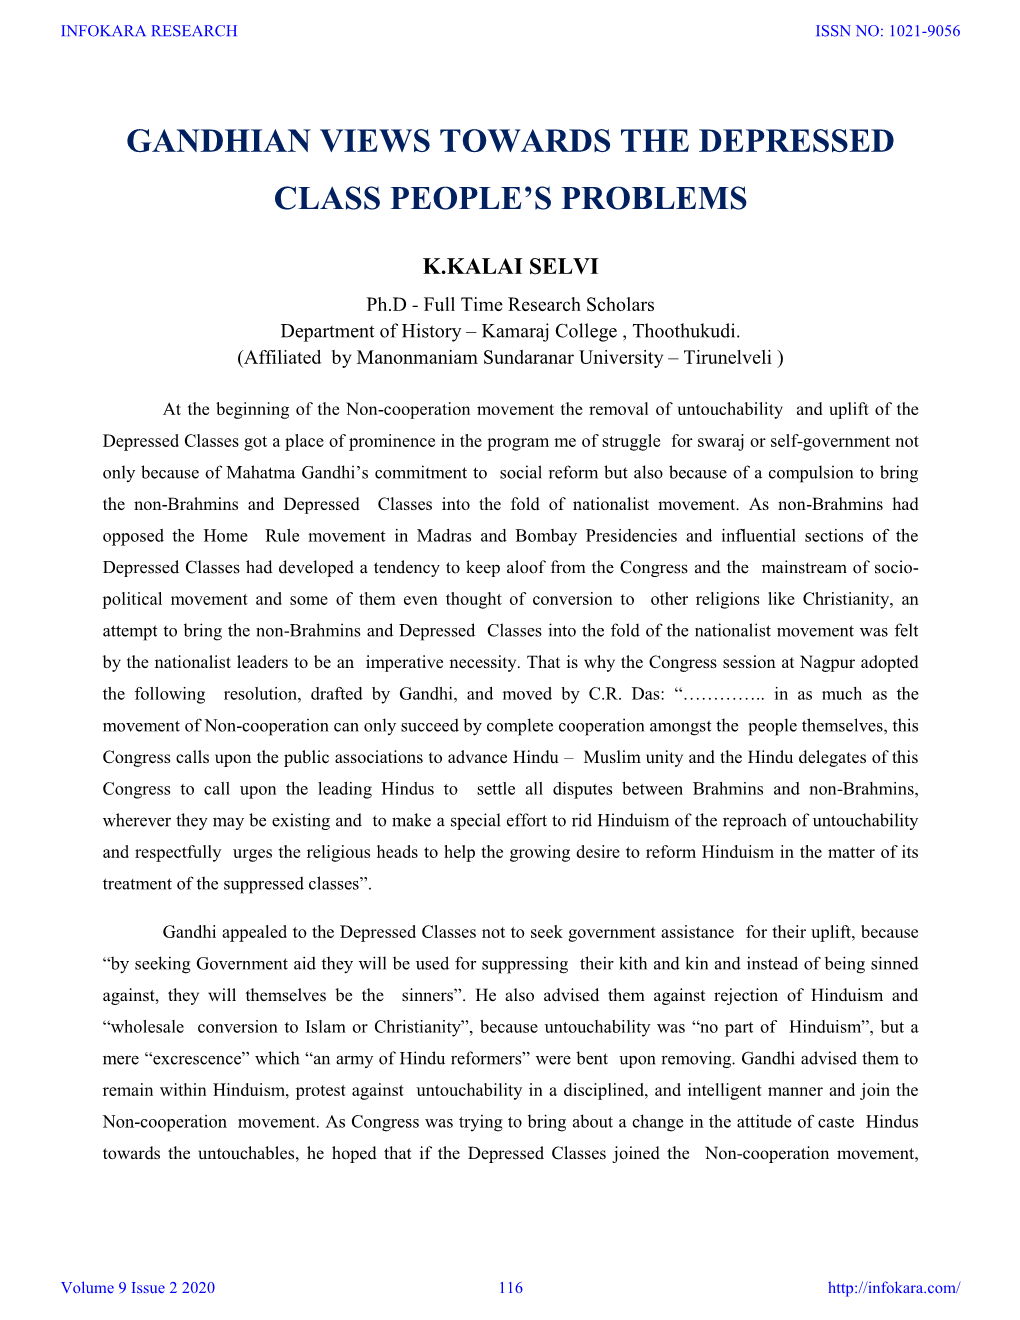 Gandhian Views Towards the Depressed Class People's